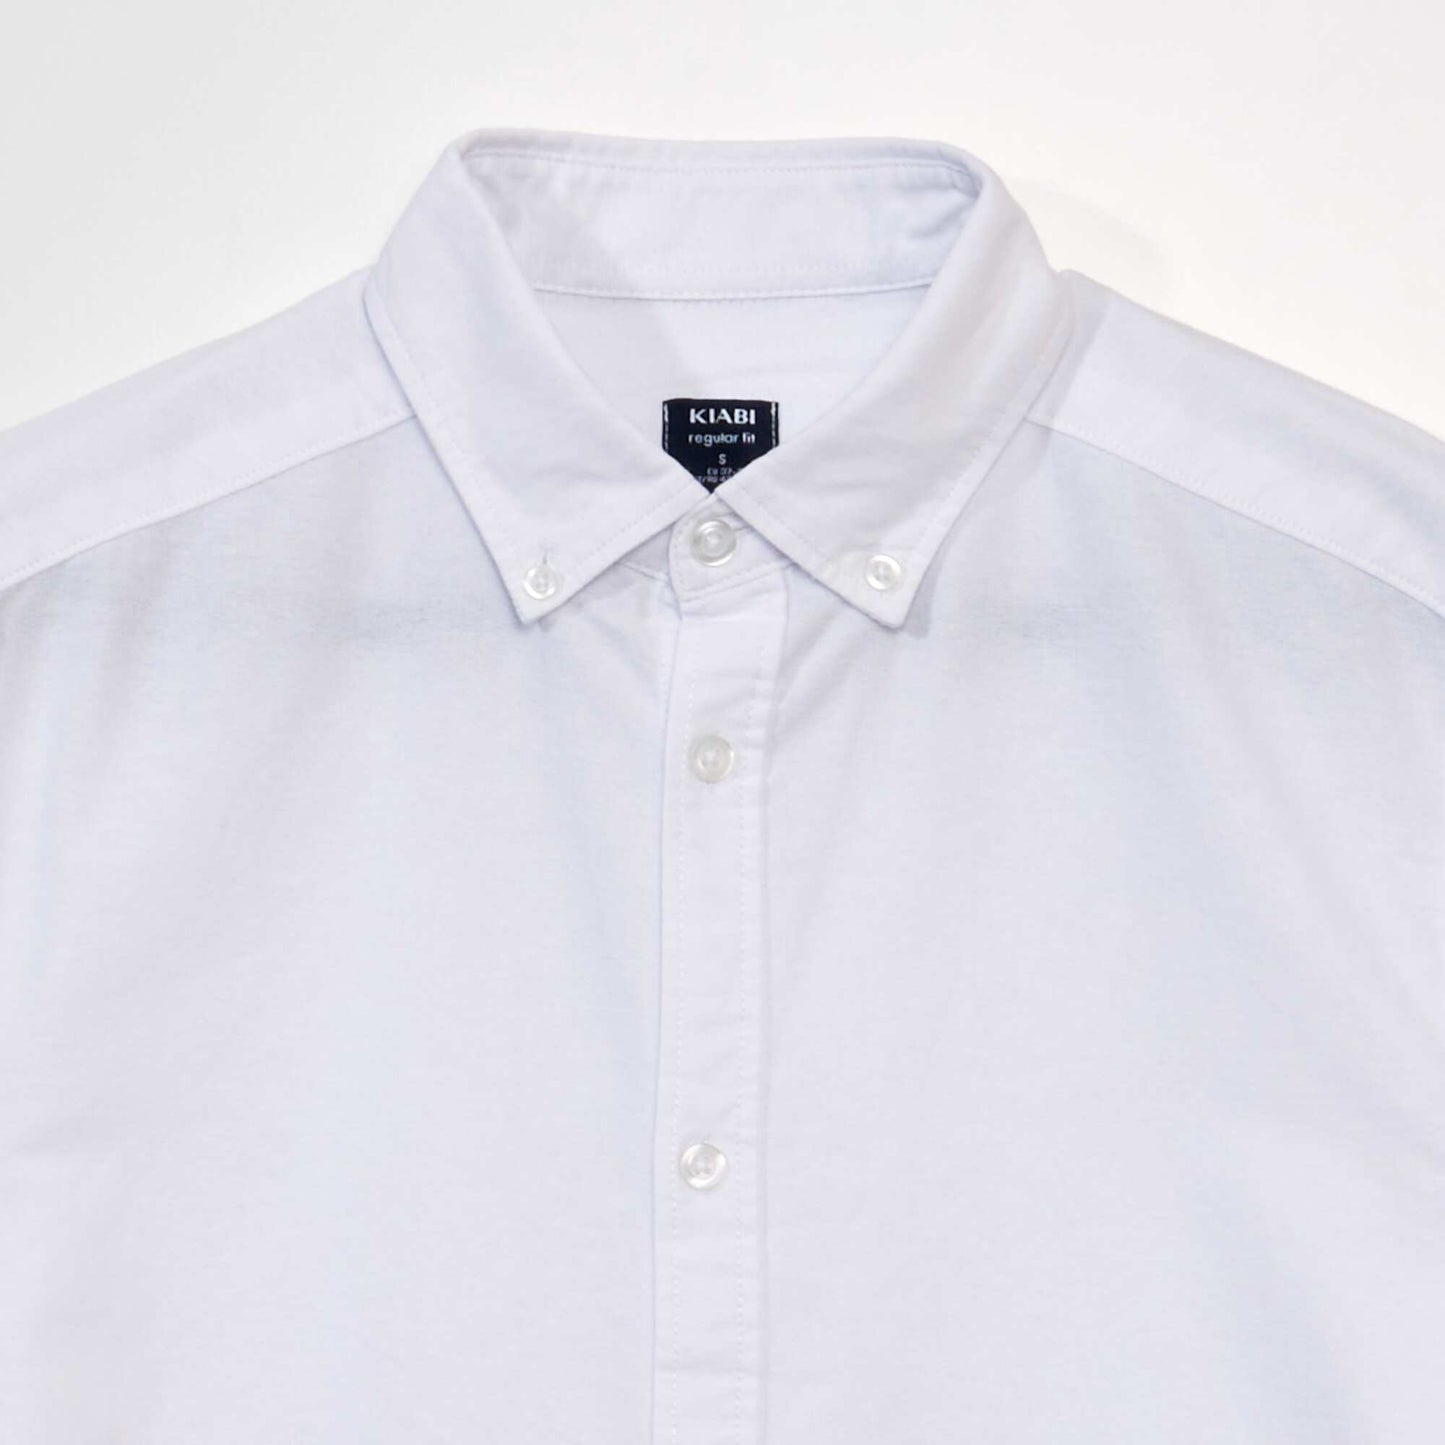 Oxford cotton shirt white